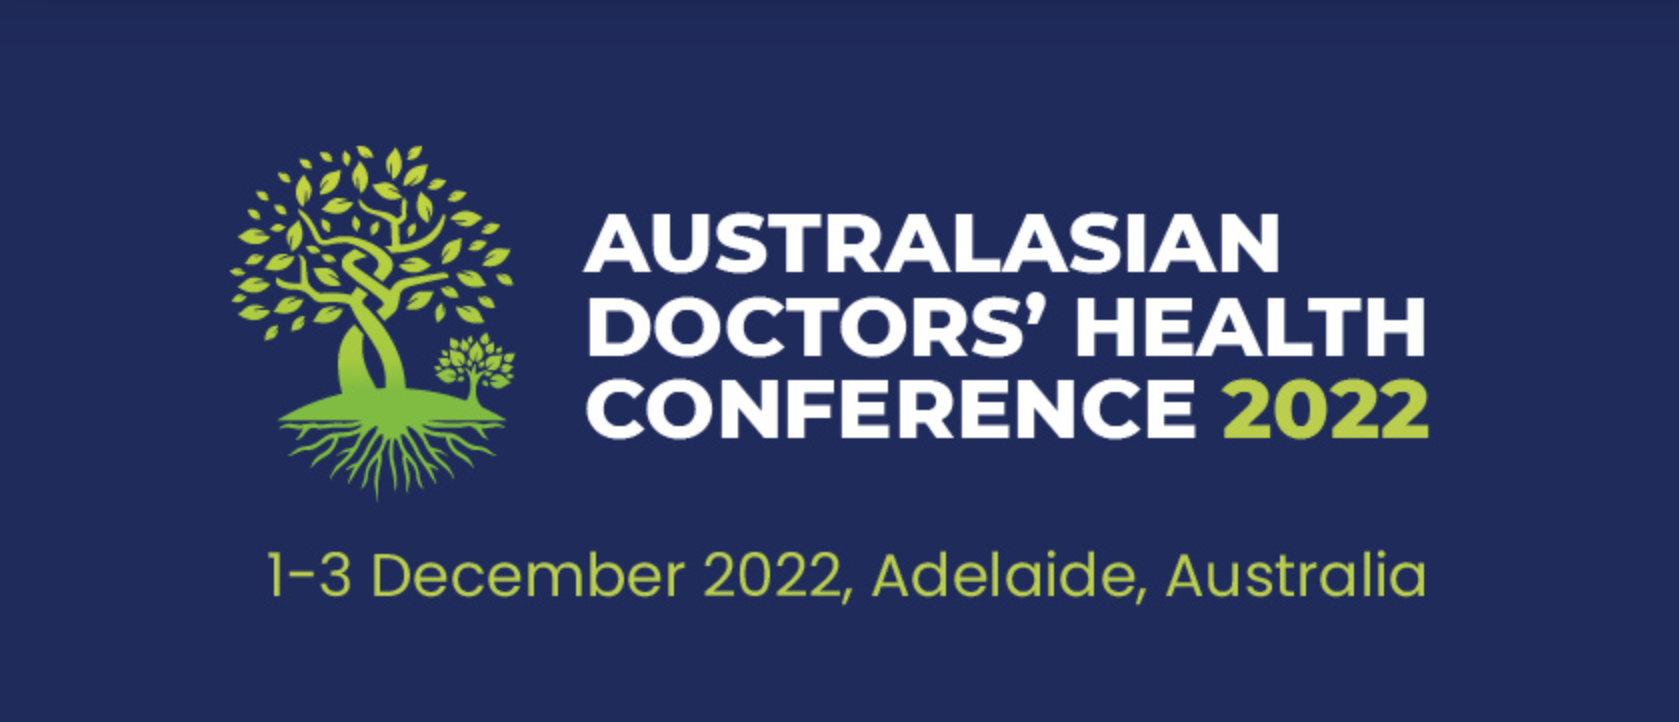 Australasian Doctors' Health Conference